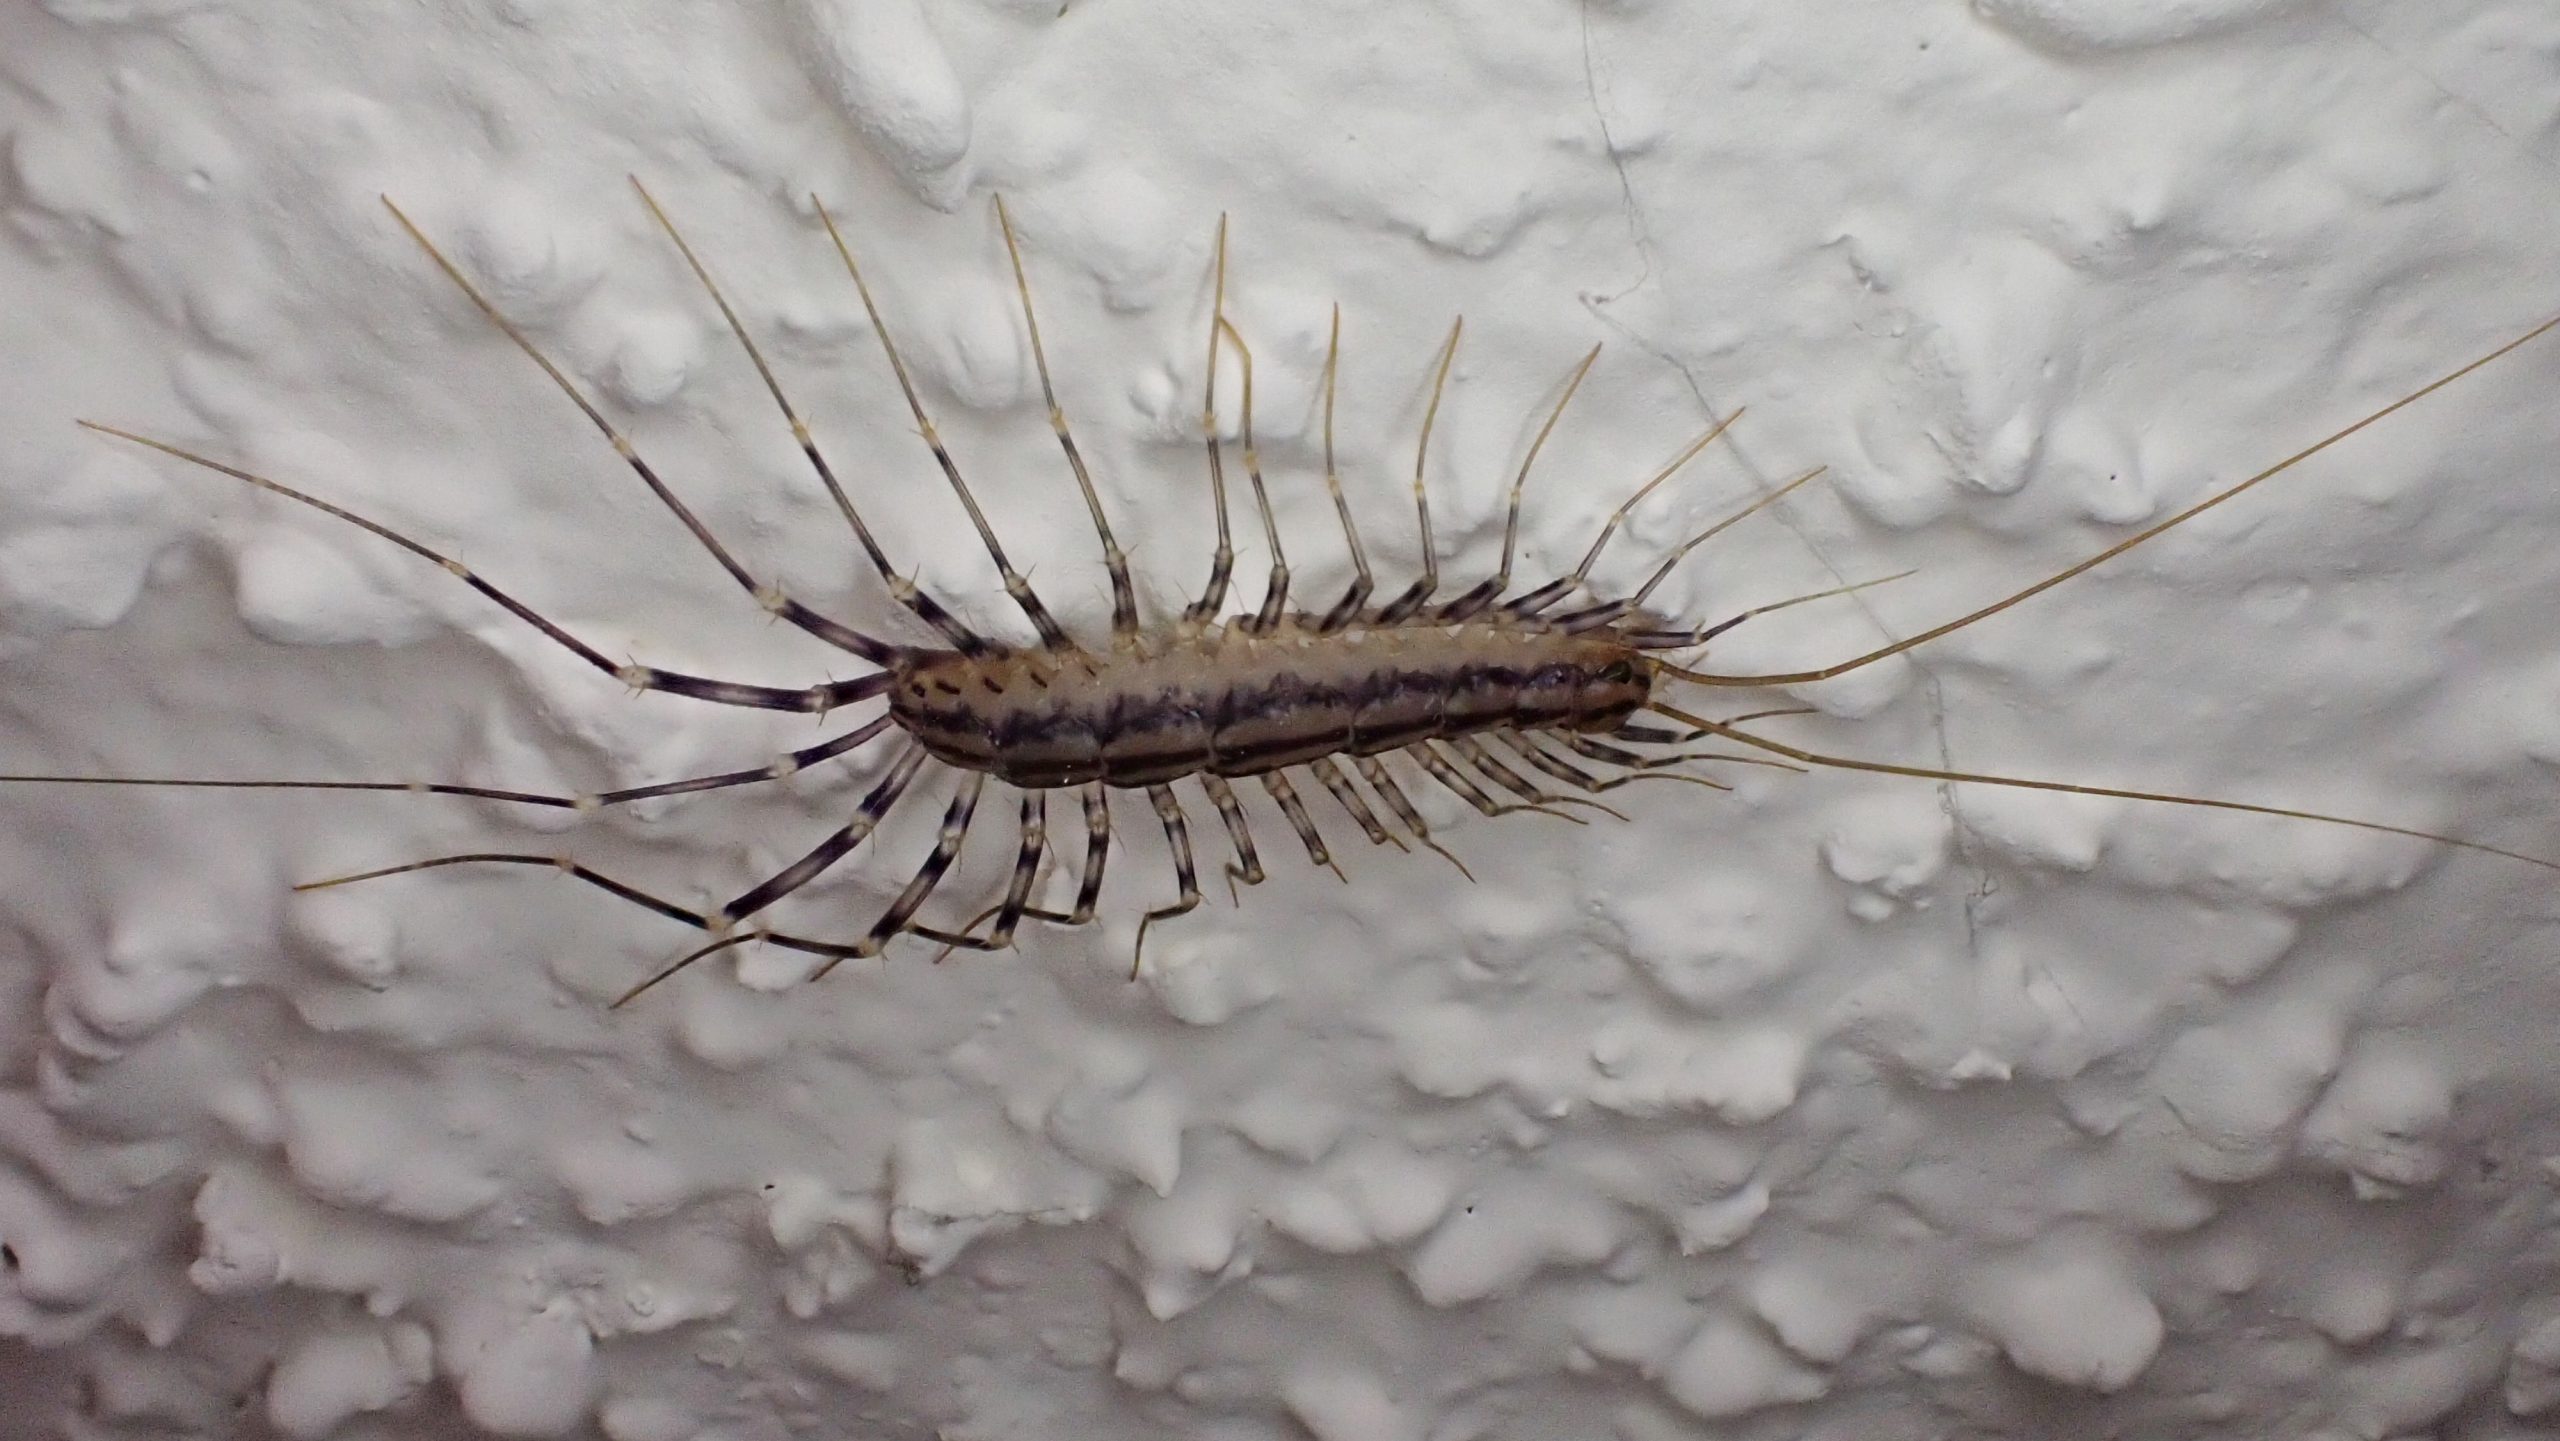 Scutigera coleoptrata (House Centipede) – 10,000 Things of the